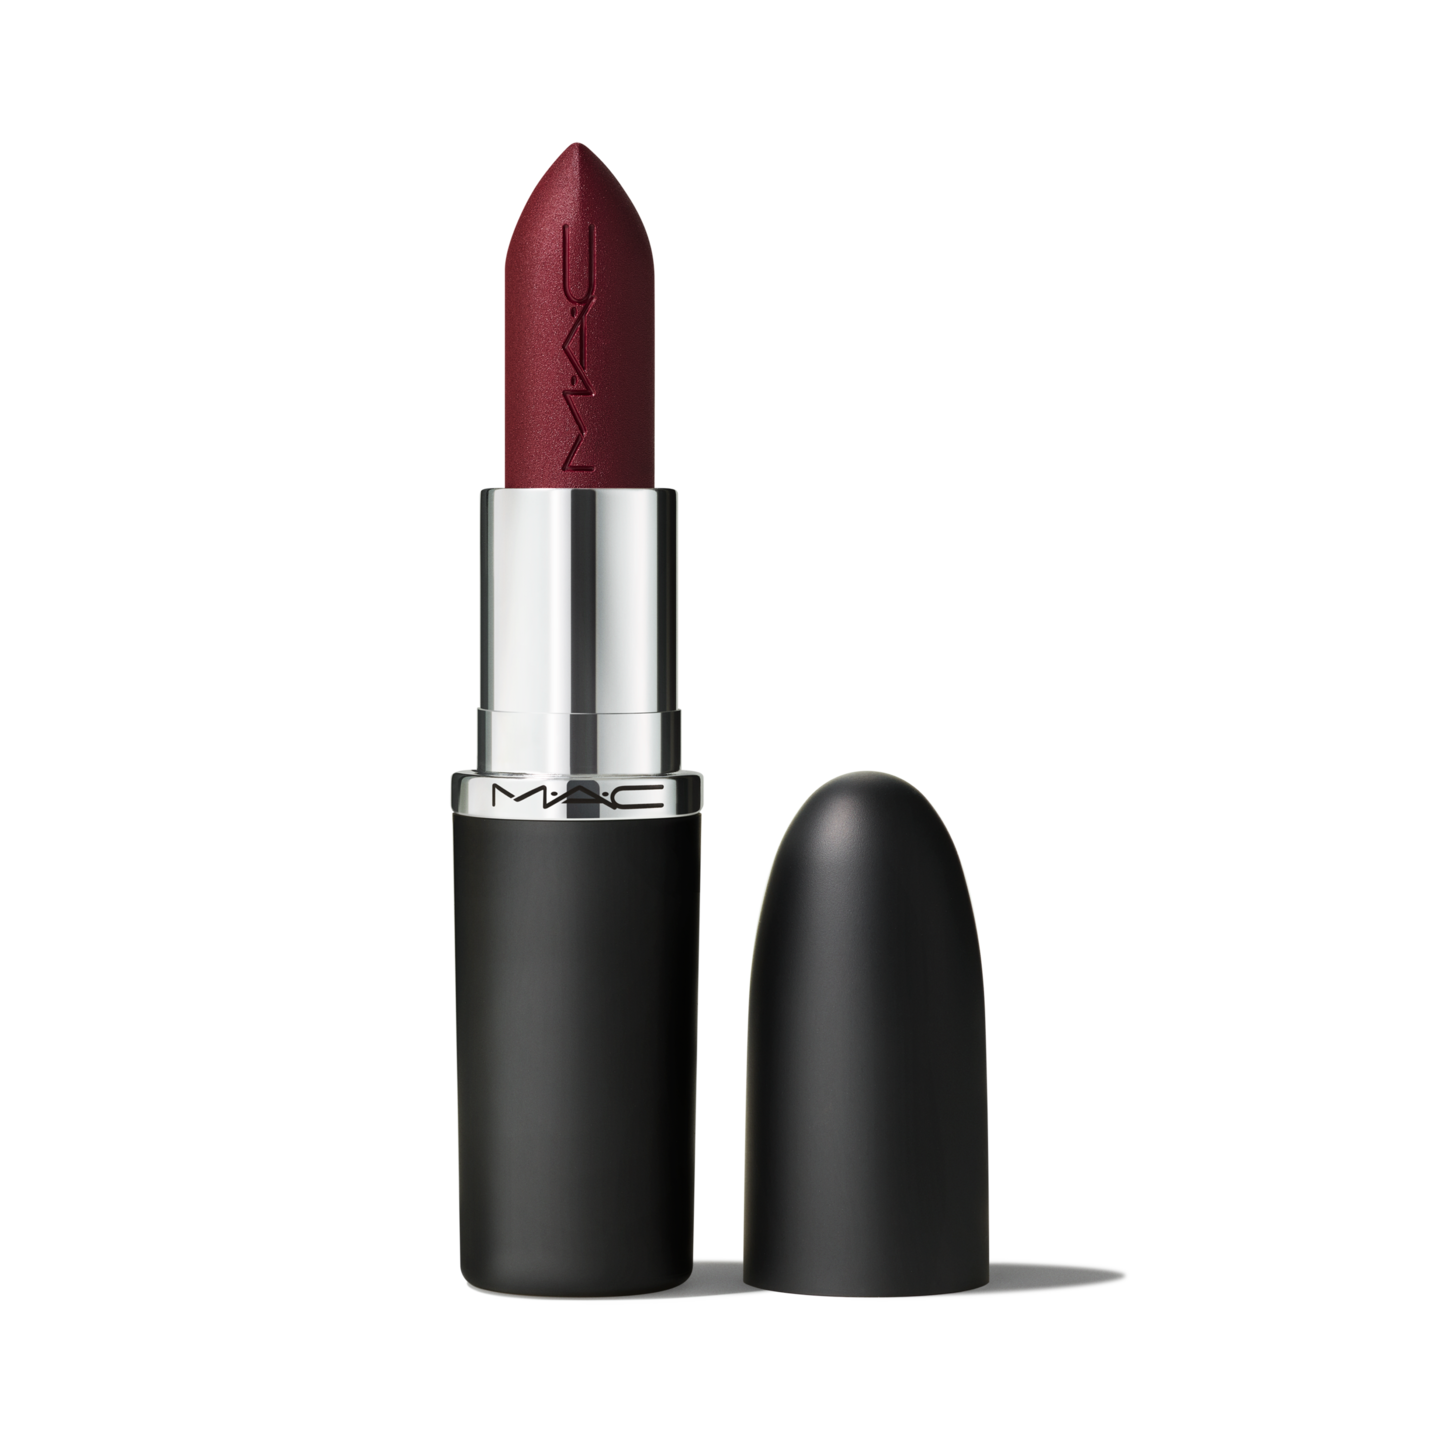 Product Review: Mac Honeylove Matte Lipstick